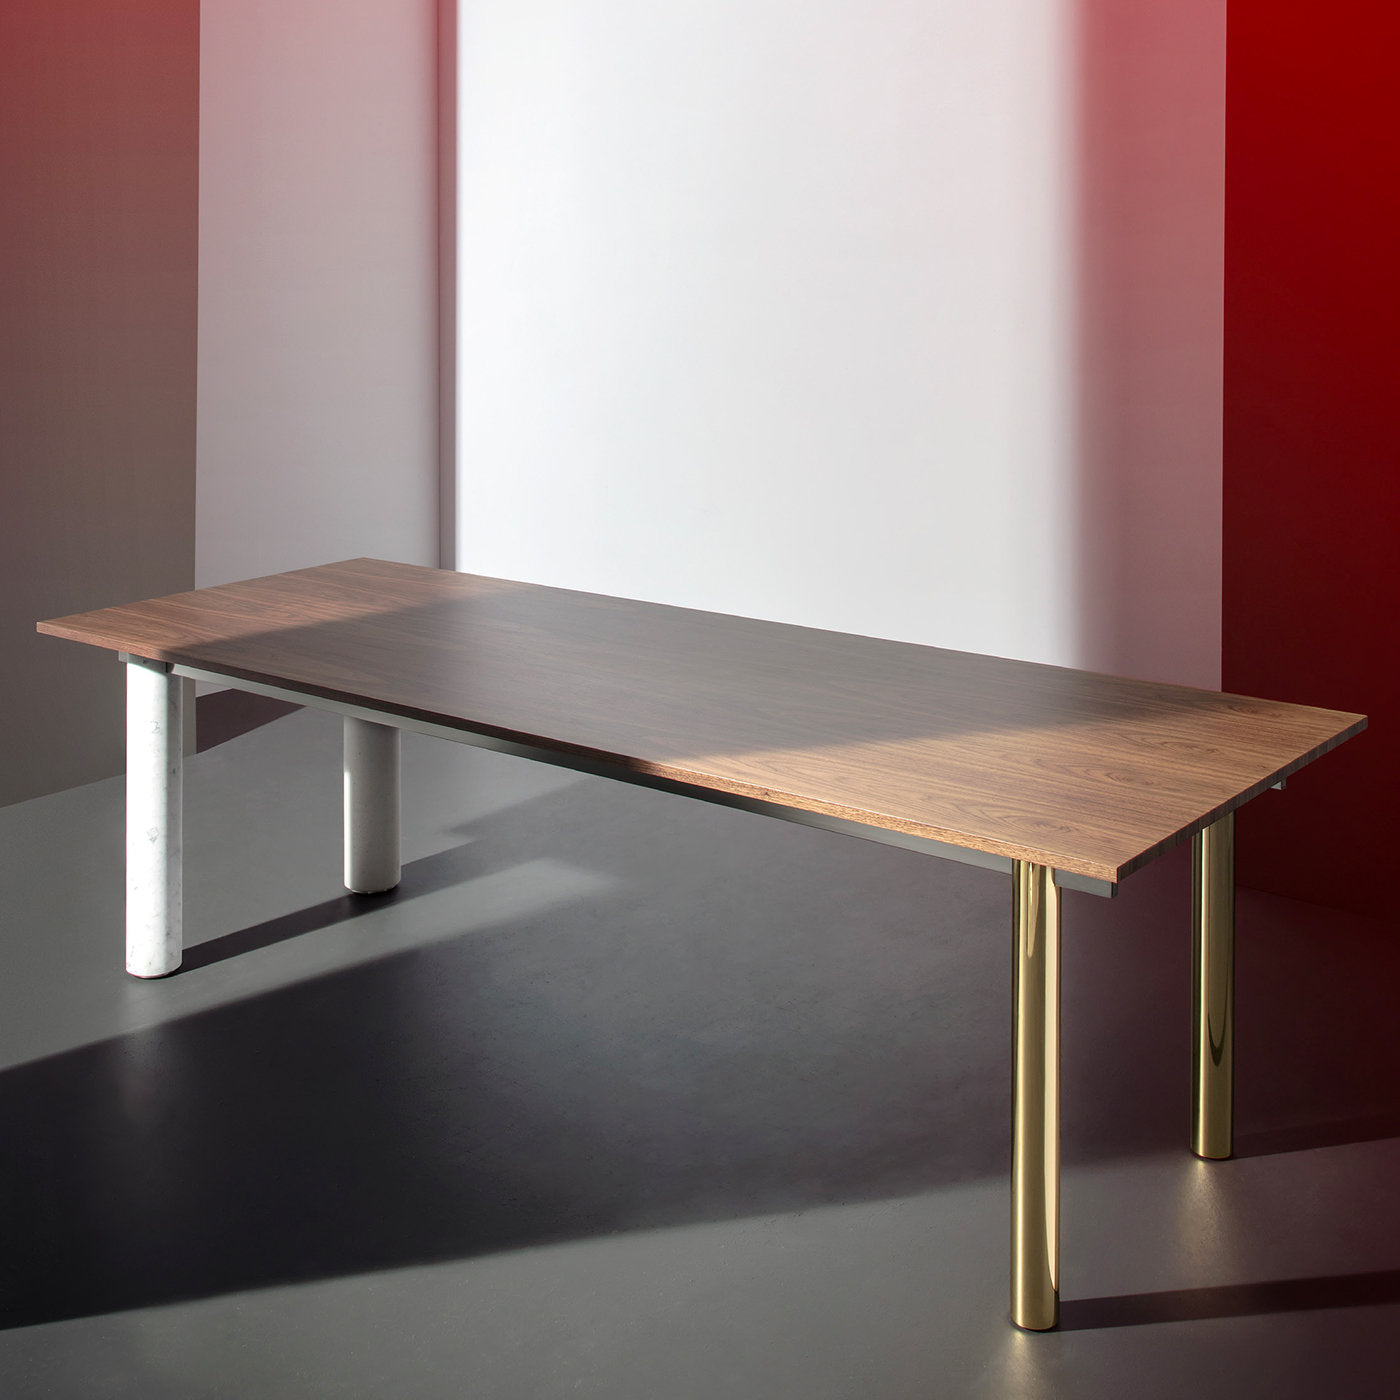 Quattro Gambe Table by Francesco Faccin - Alternative view 1